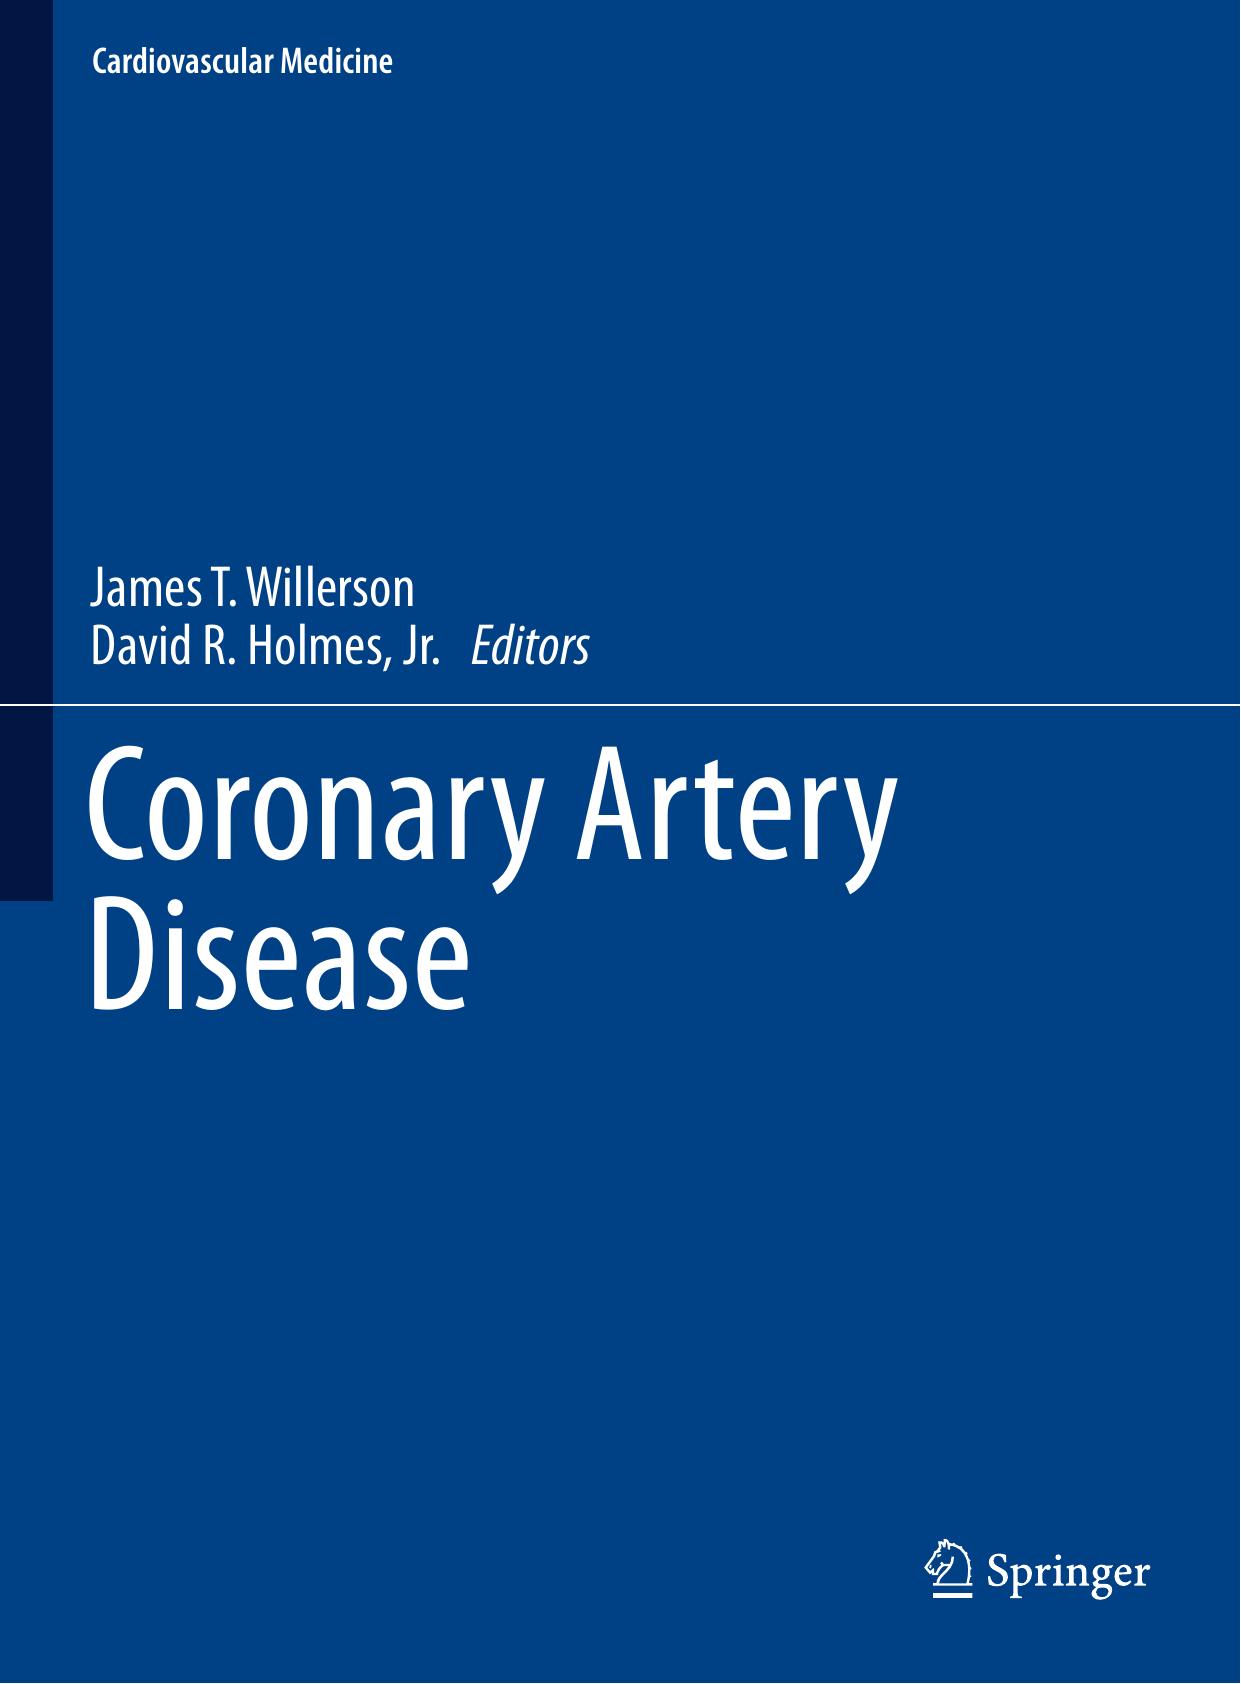 Coronary Artery Disease by James T. Willerson.jpg